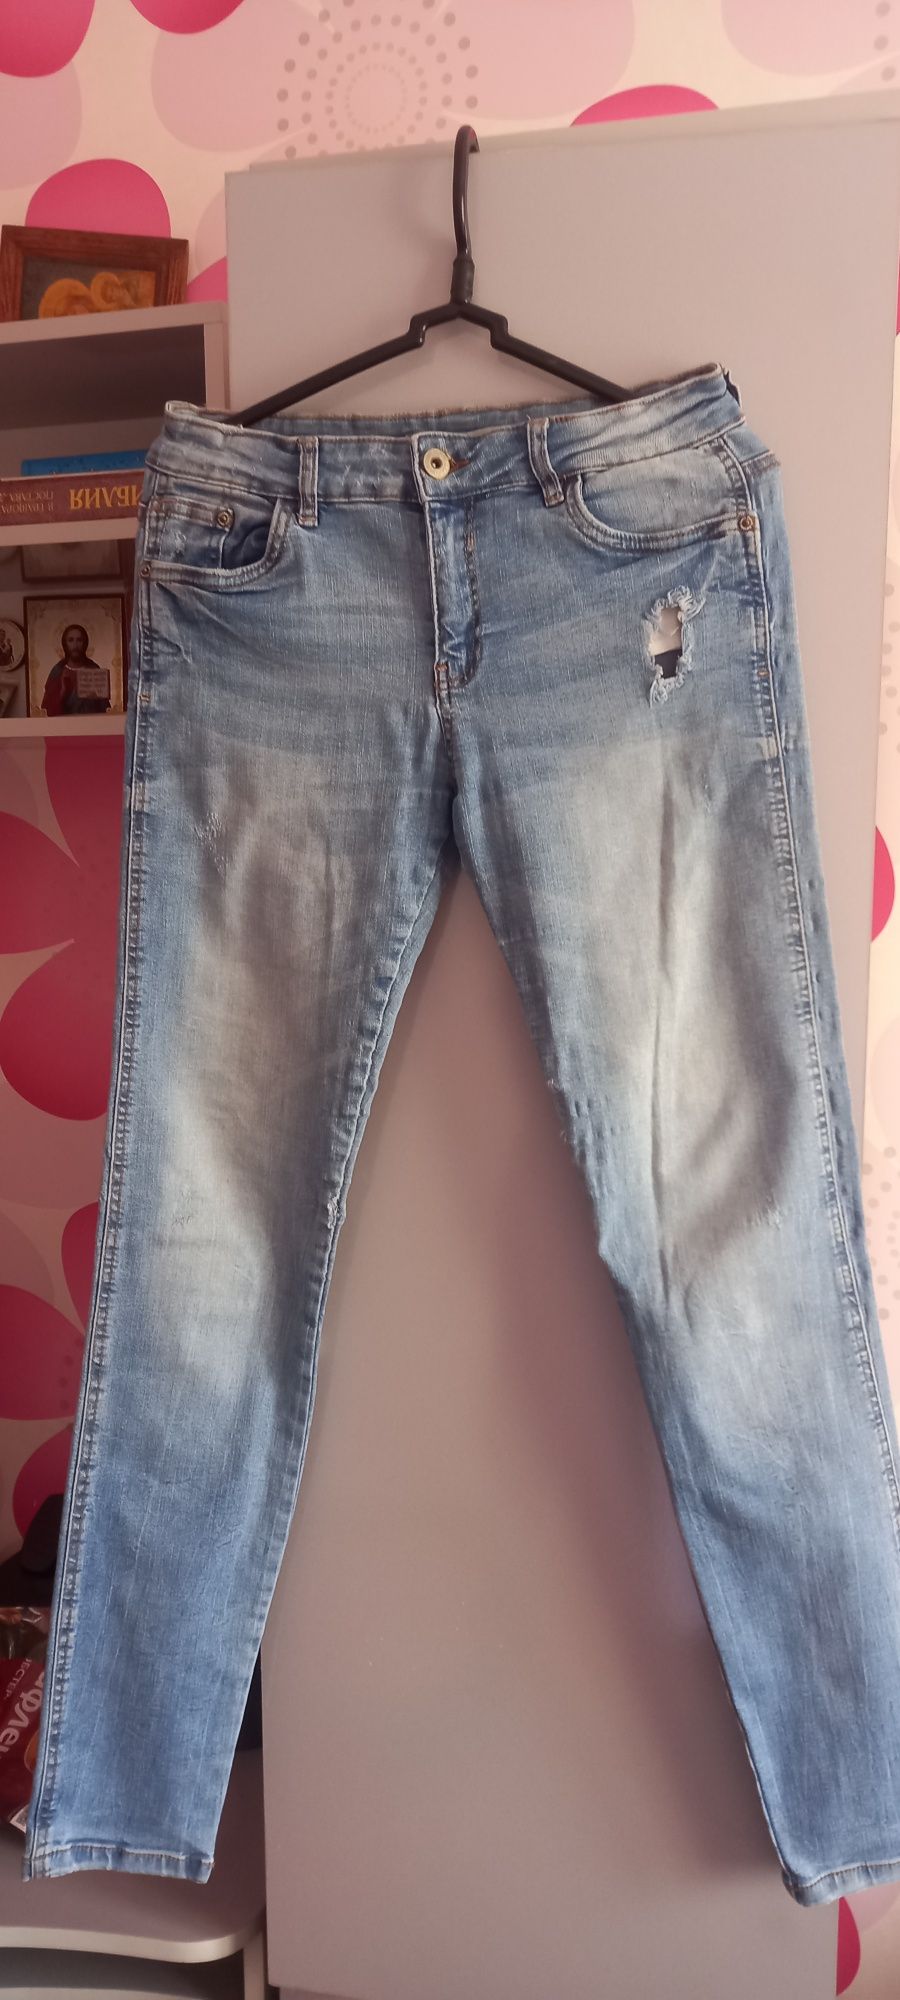 Турецкие джинсы фирмы Бершка 29 размер.